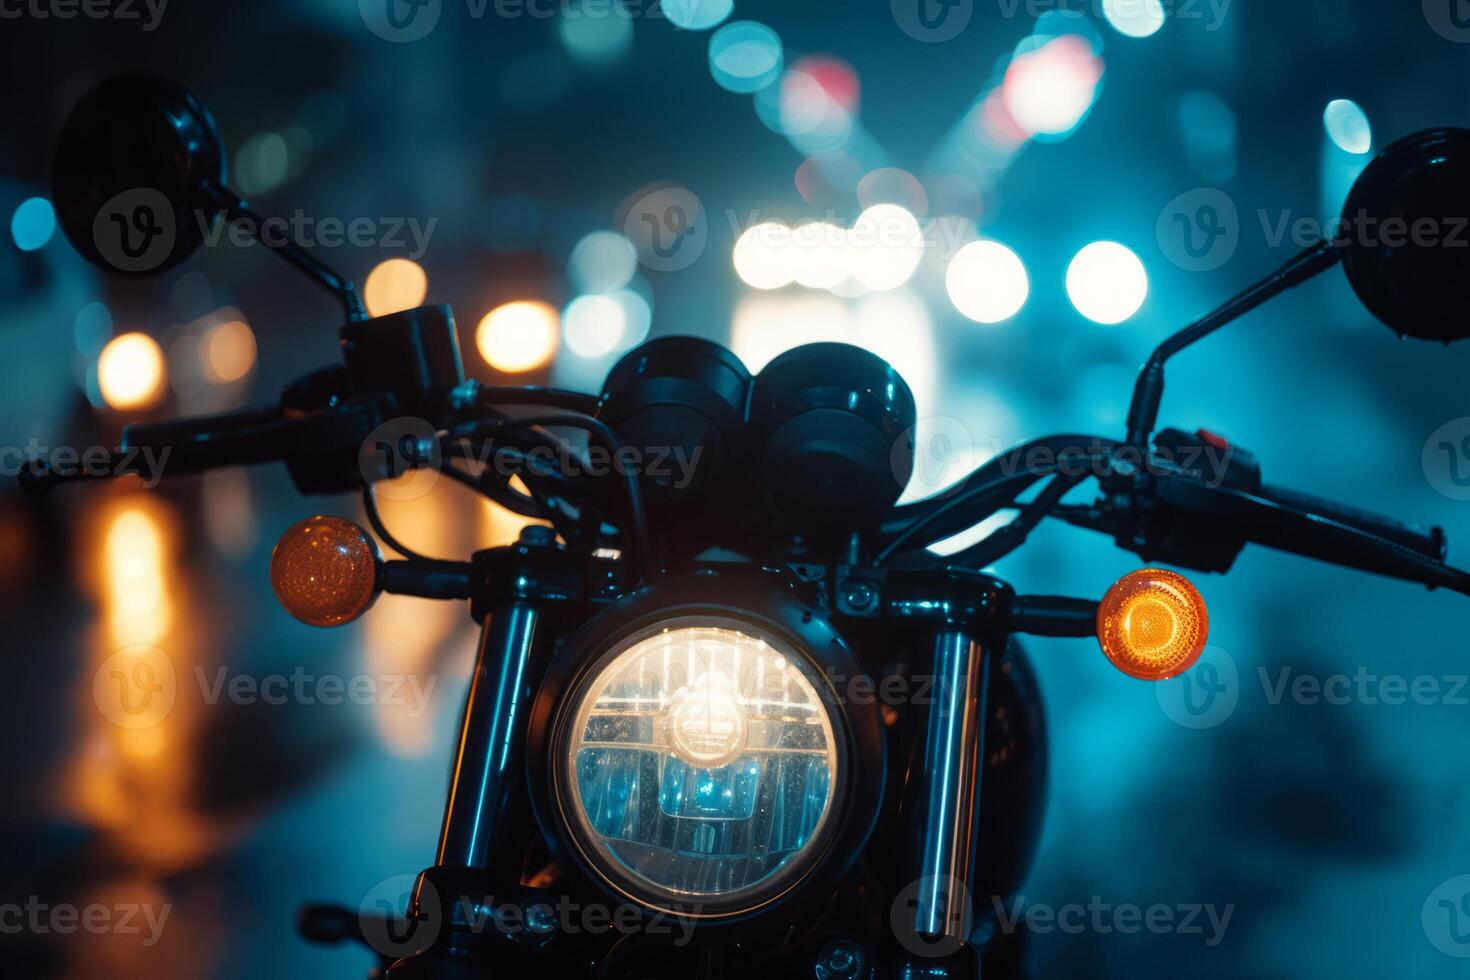 AI generated Motorbike with glowing headlamp in night photo